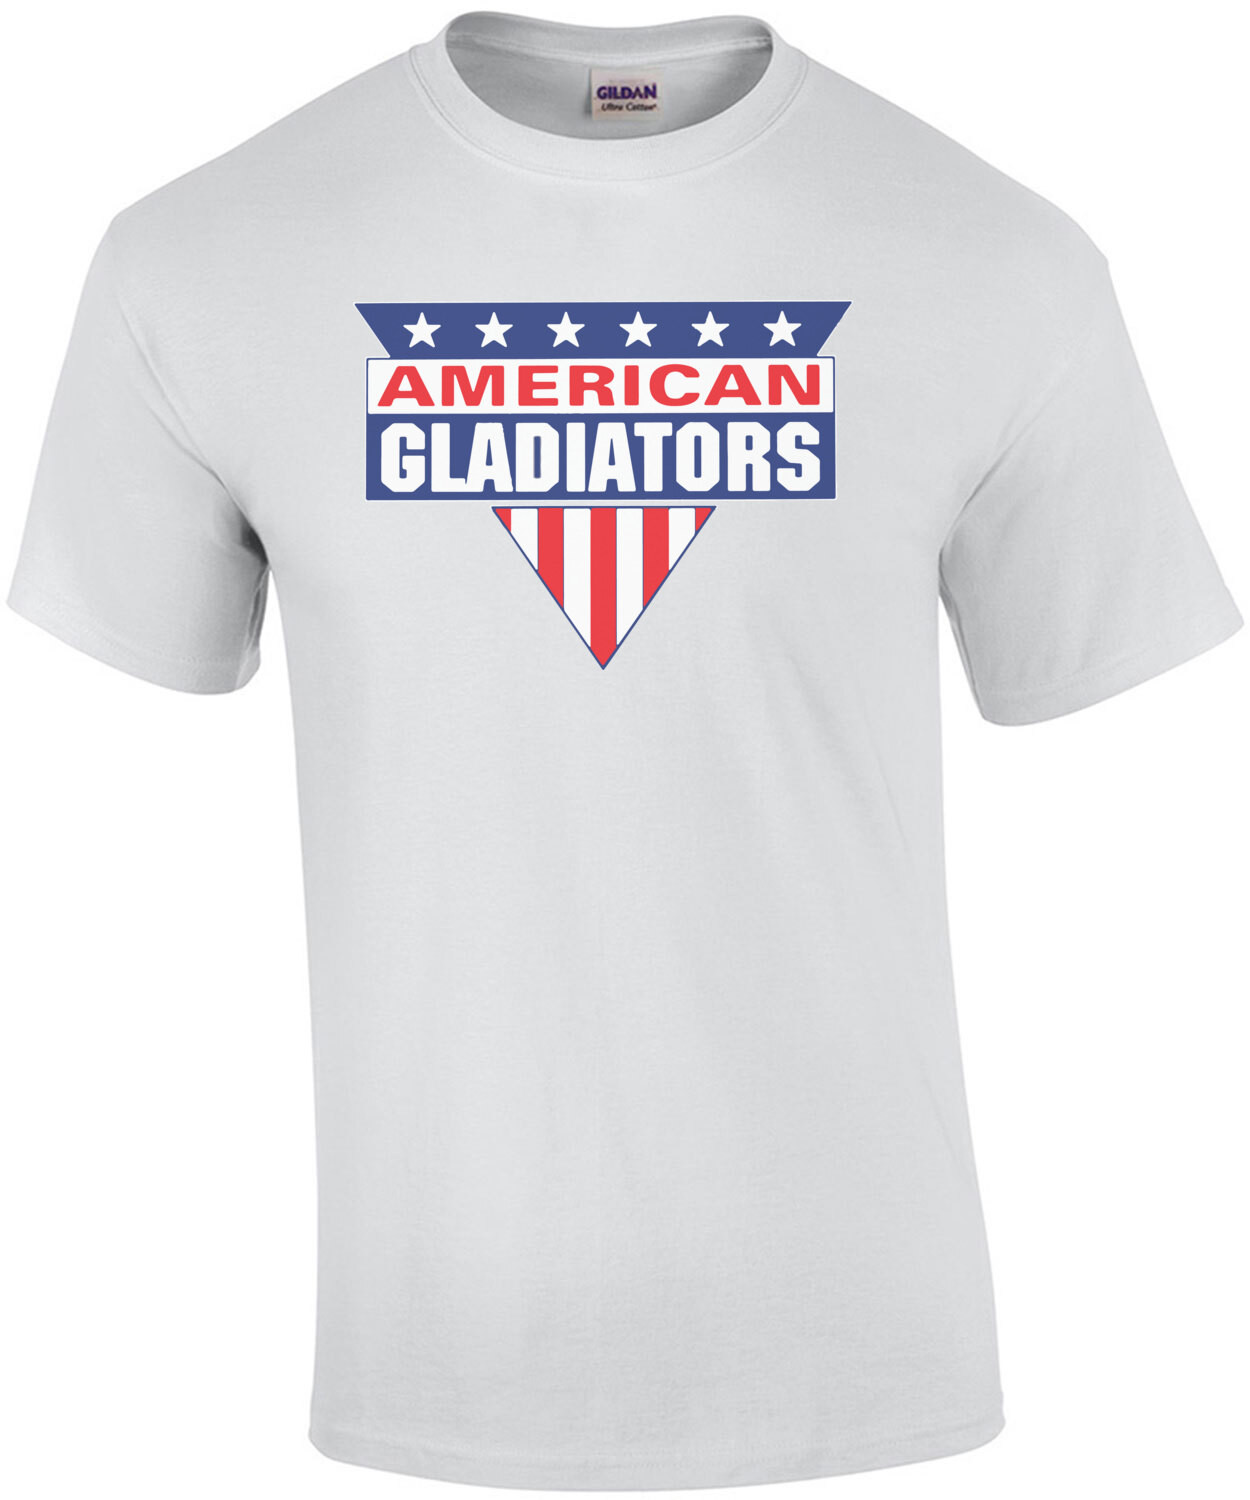 American Gladiators - 90's T-Shirt